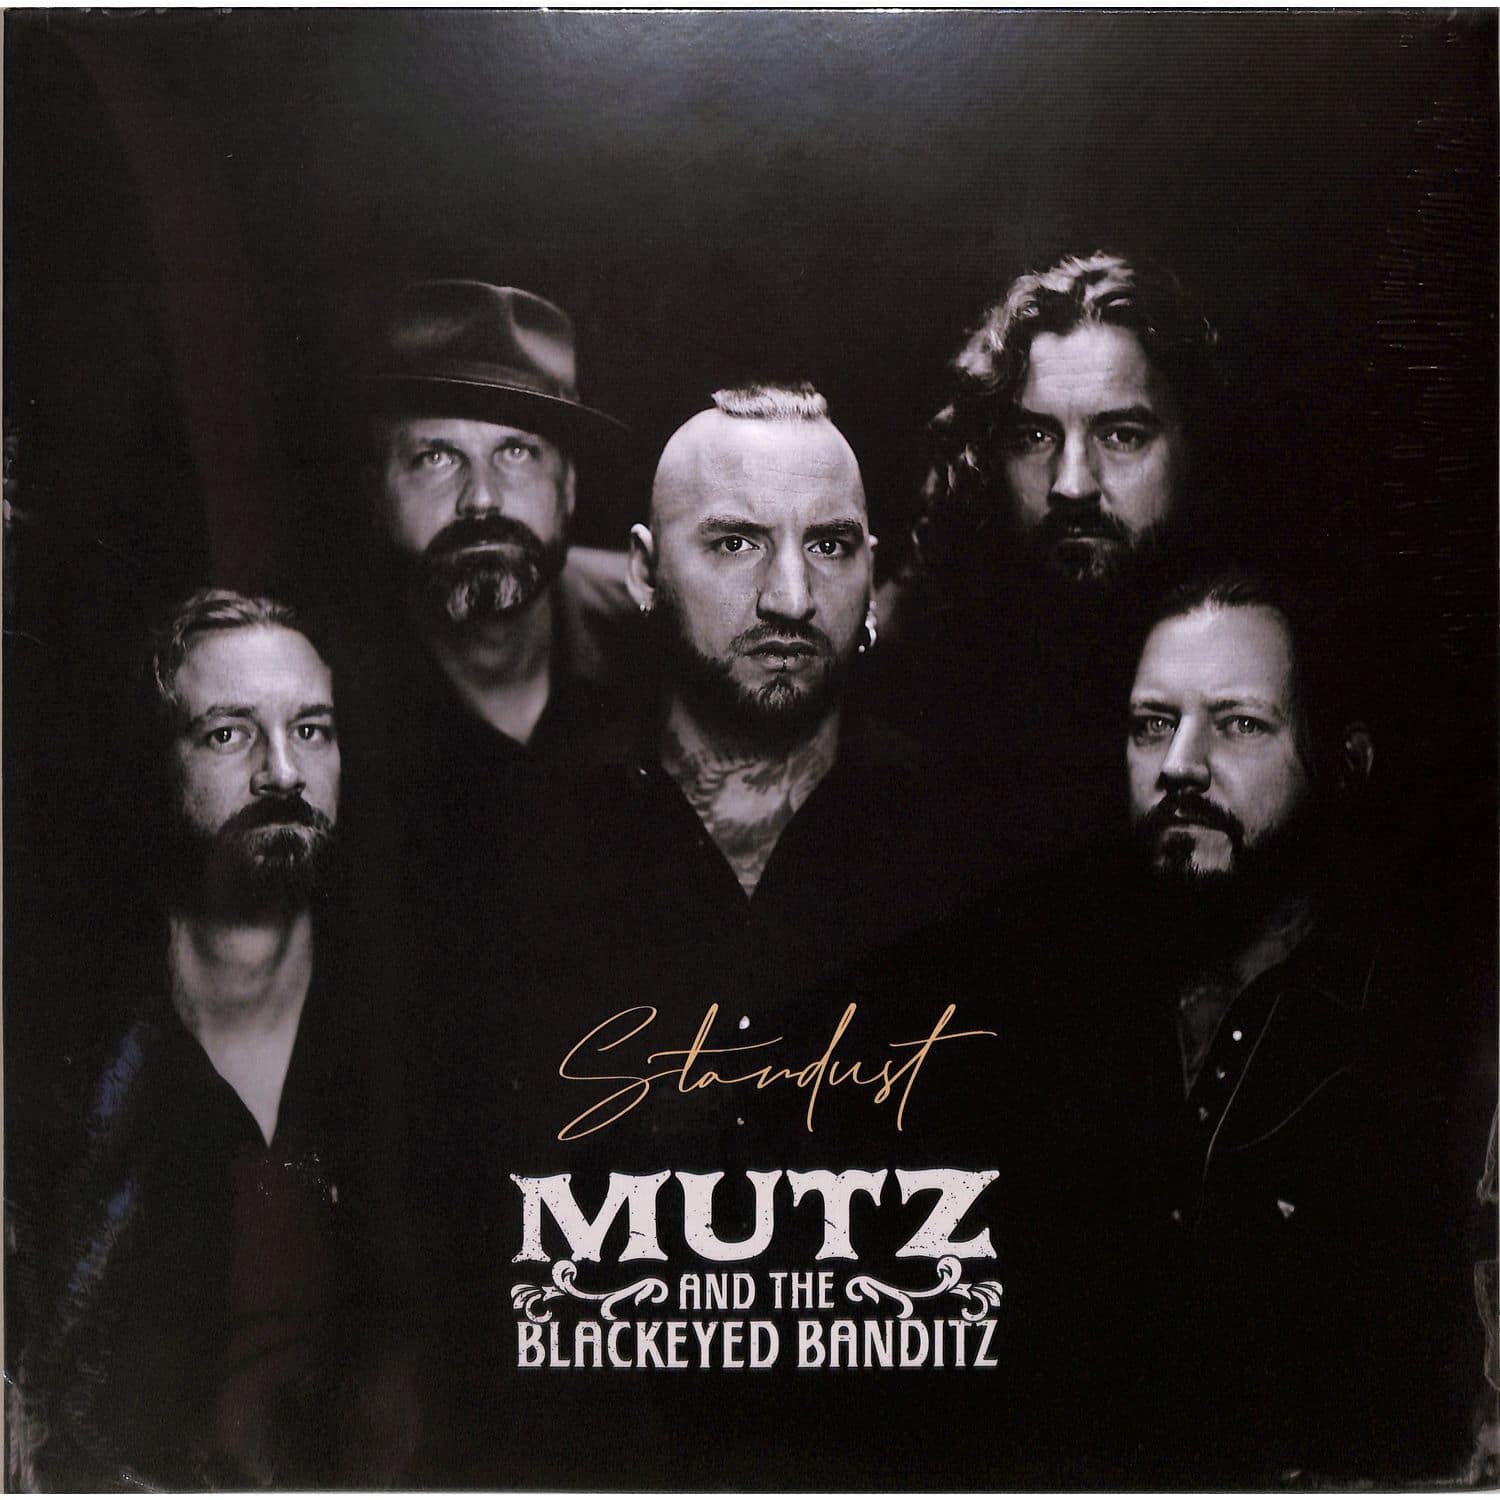 Mutz & The Blackeyed Banditz - STARDUST 